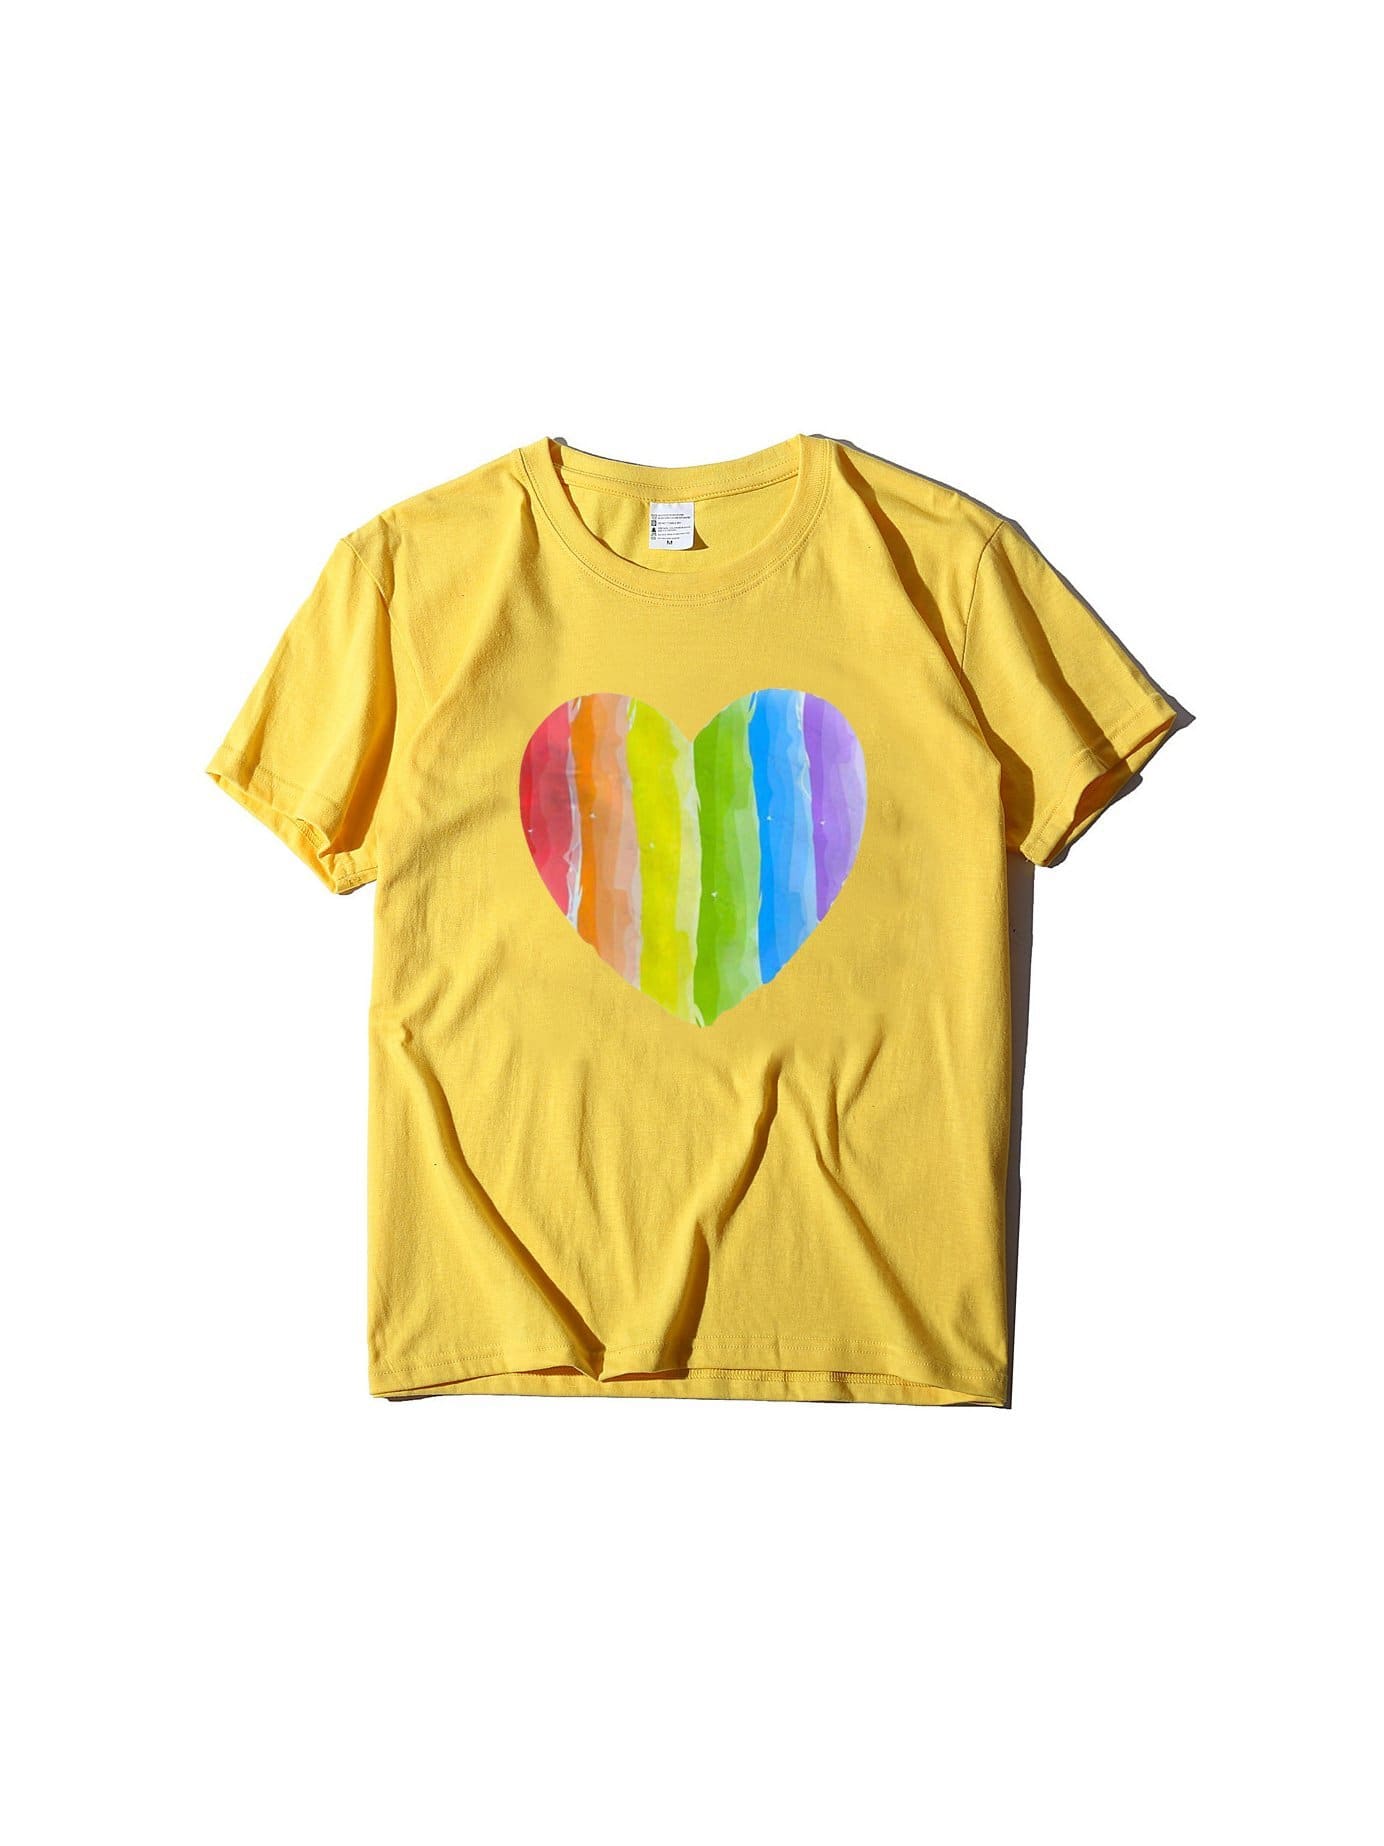 lovevop Heart Print Loose Casual Short Sleeve T-Shirt Women